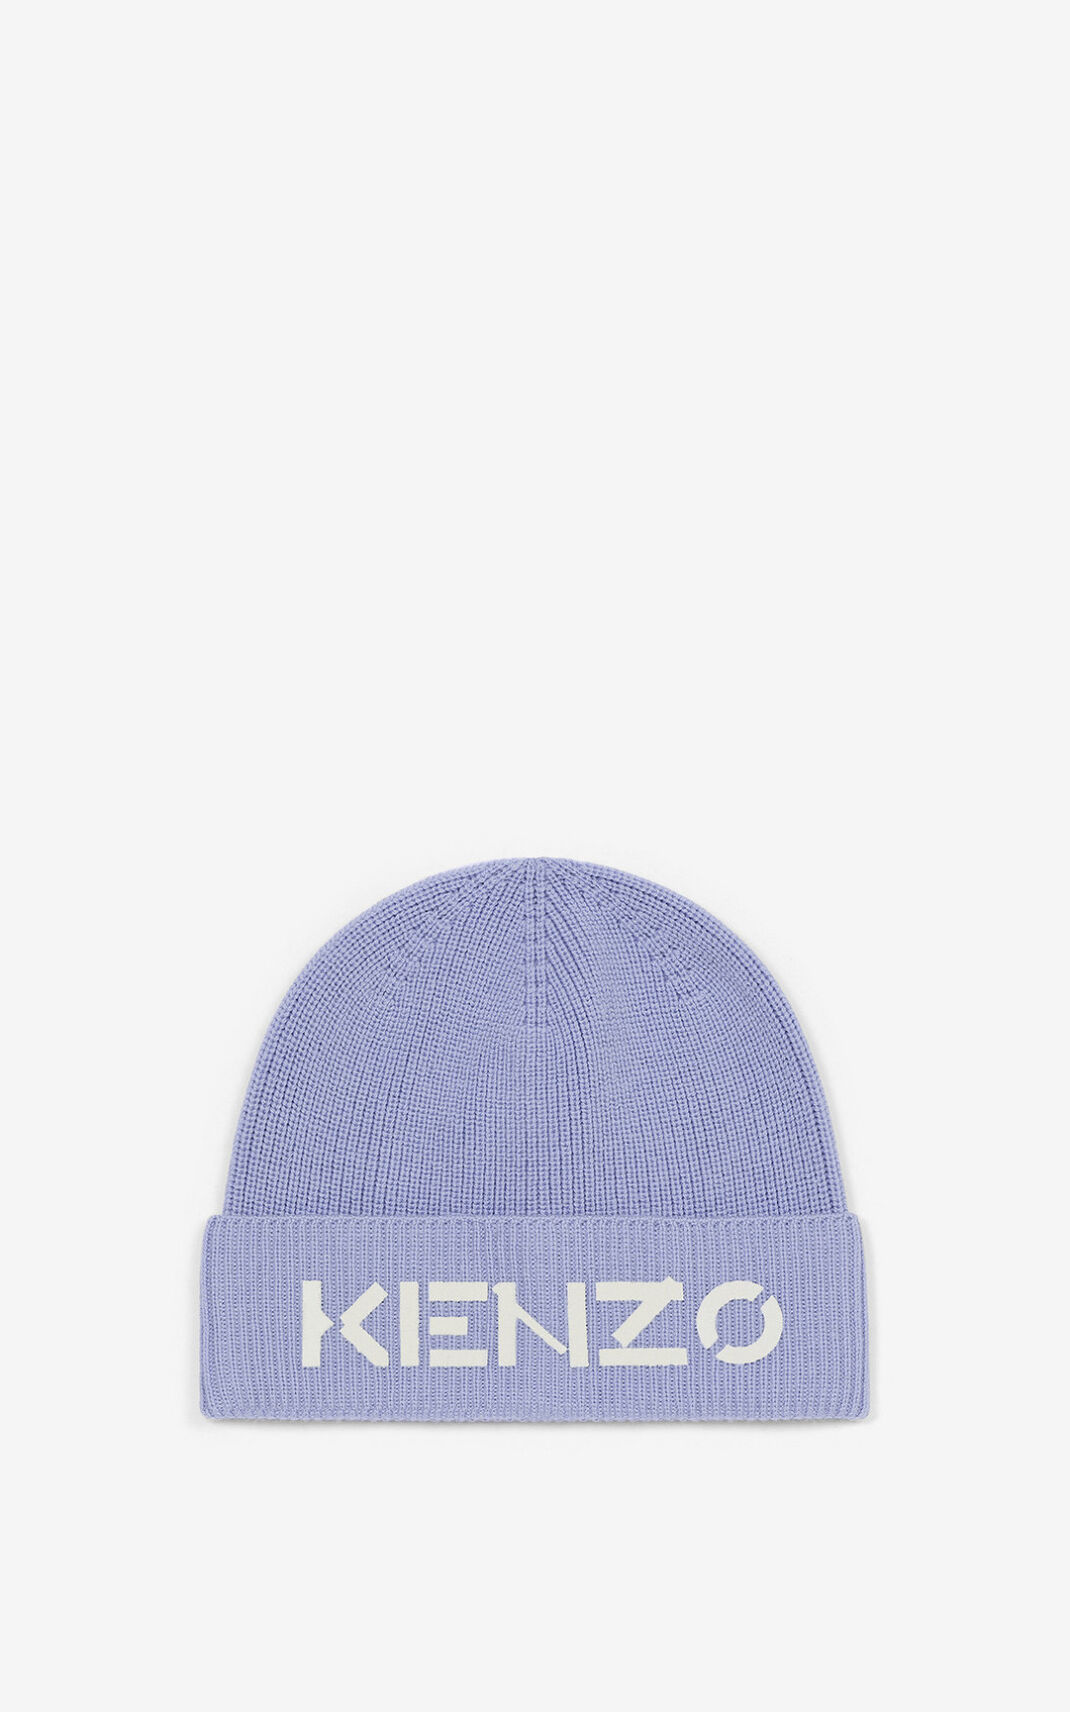 Gorro Kenzo Logo knit Mujer Azules Claro - SKU.6066437